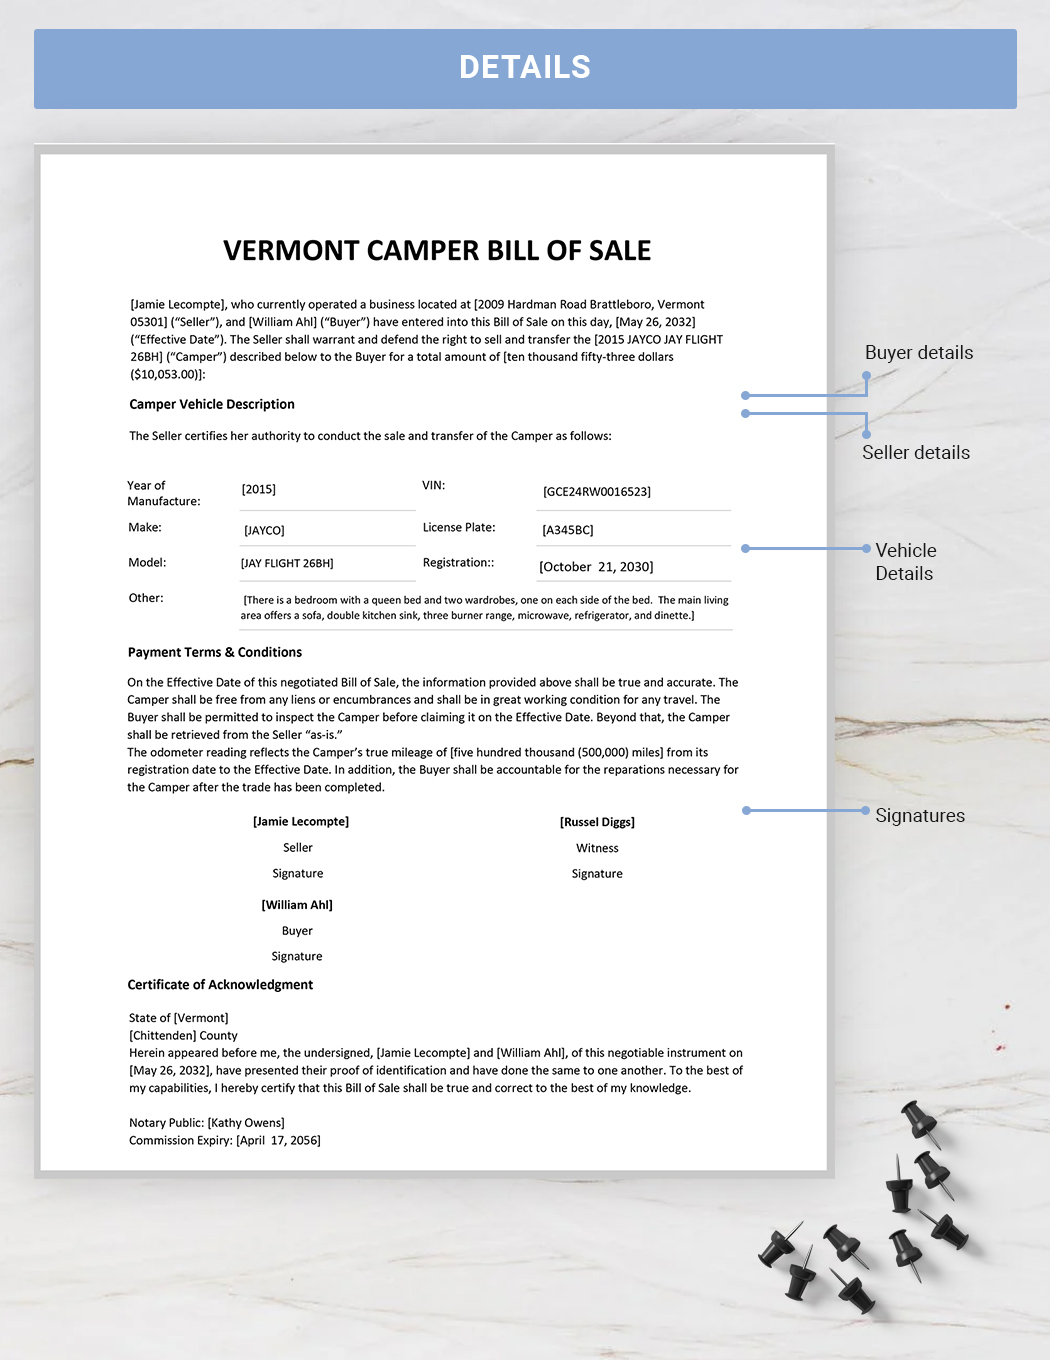 Vermont Camper Bill of Sale Template